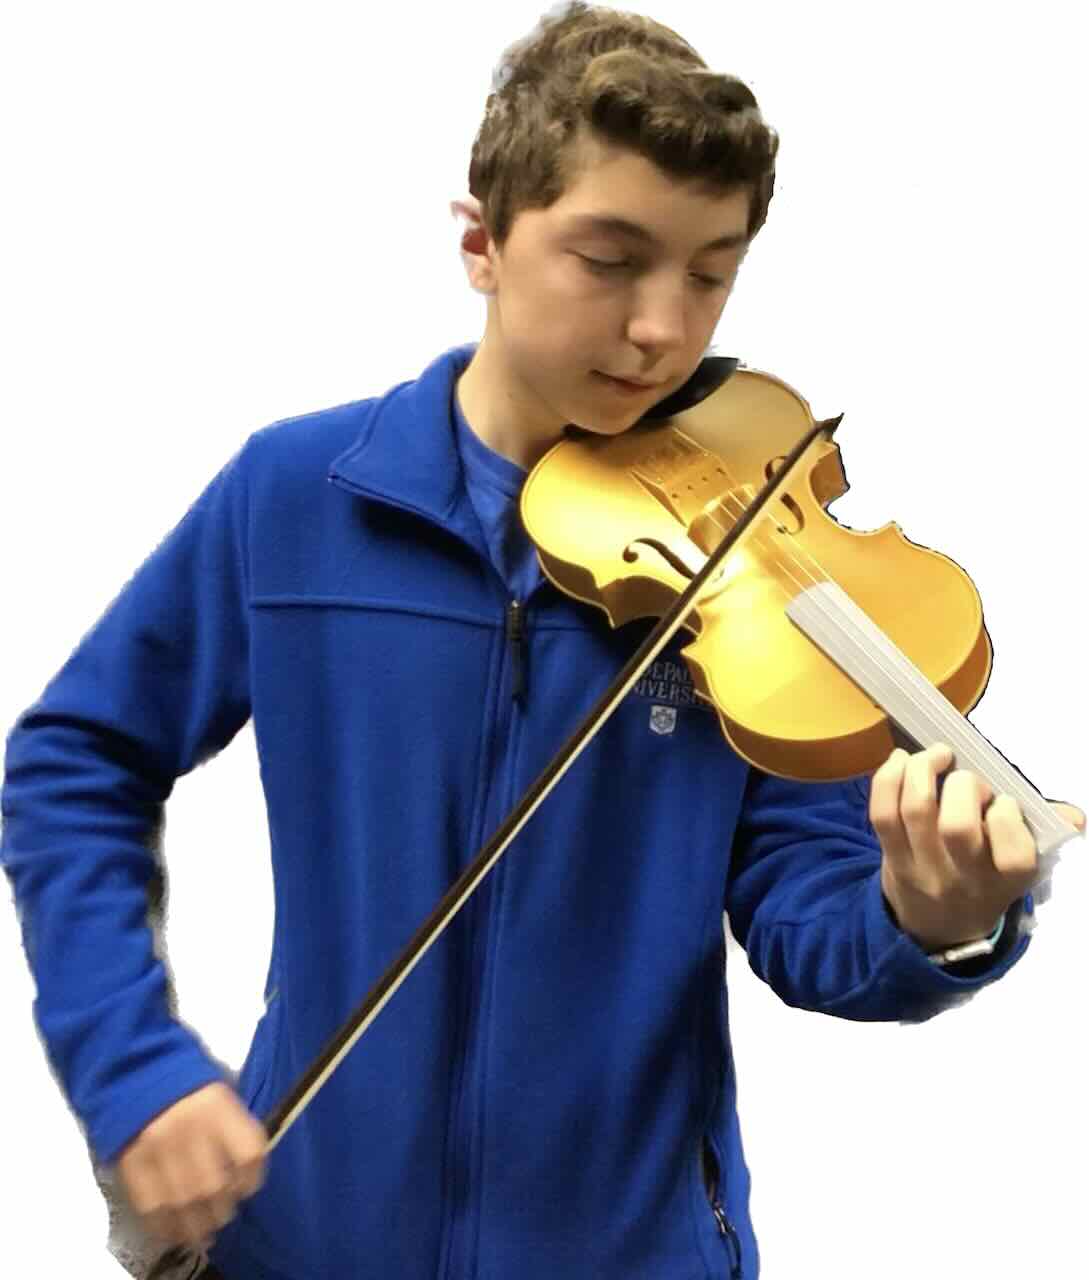 Johnny playing 3D printed violin